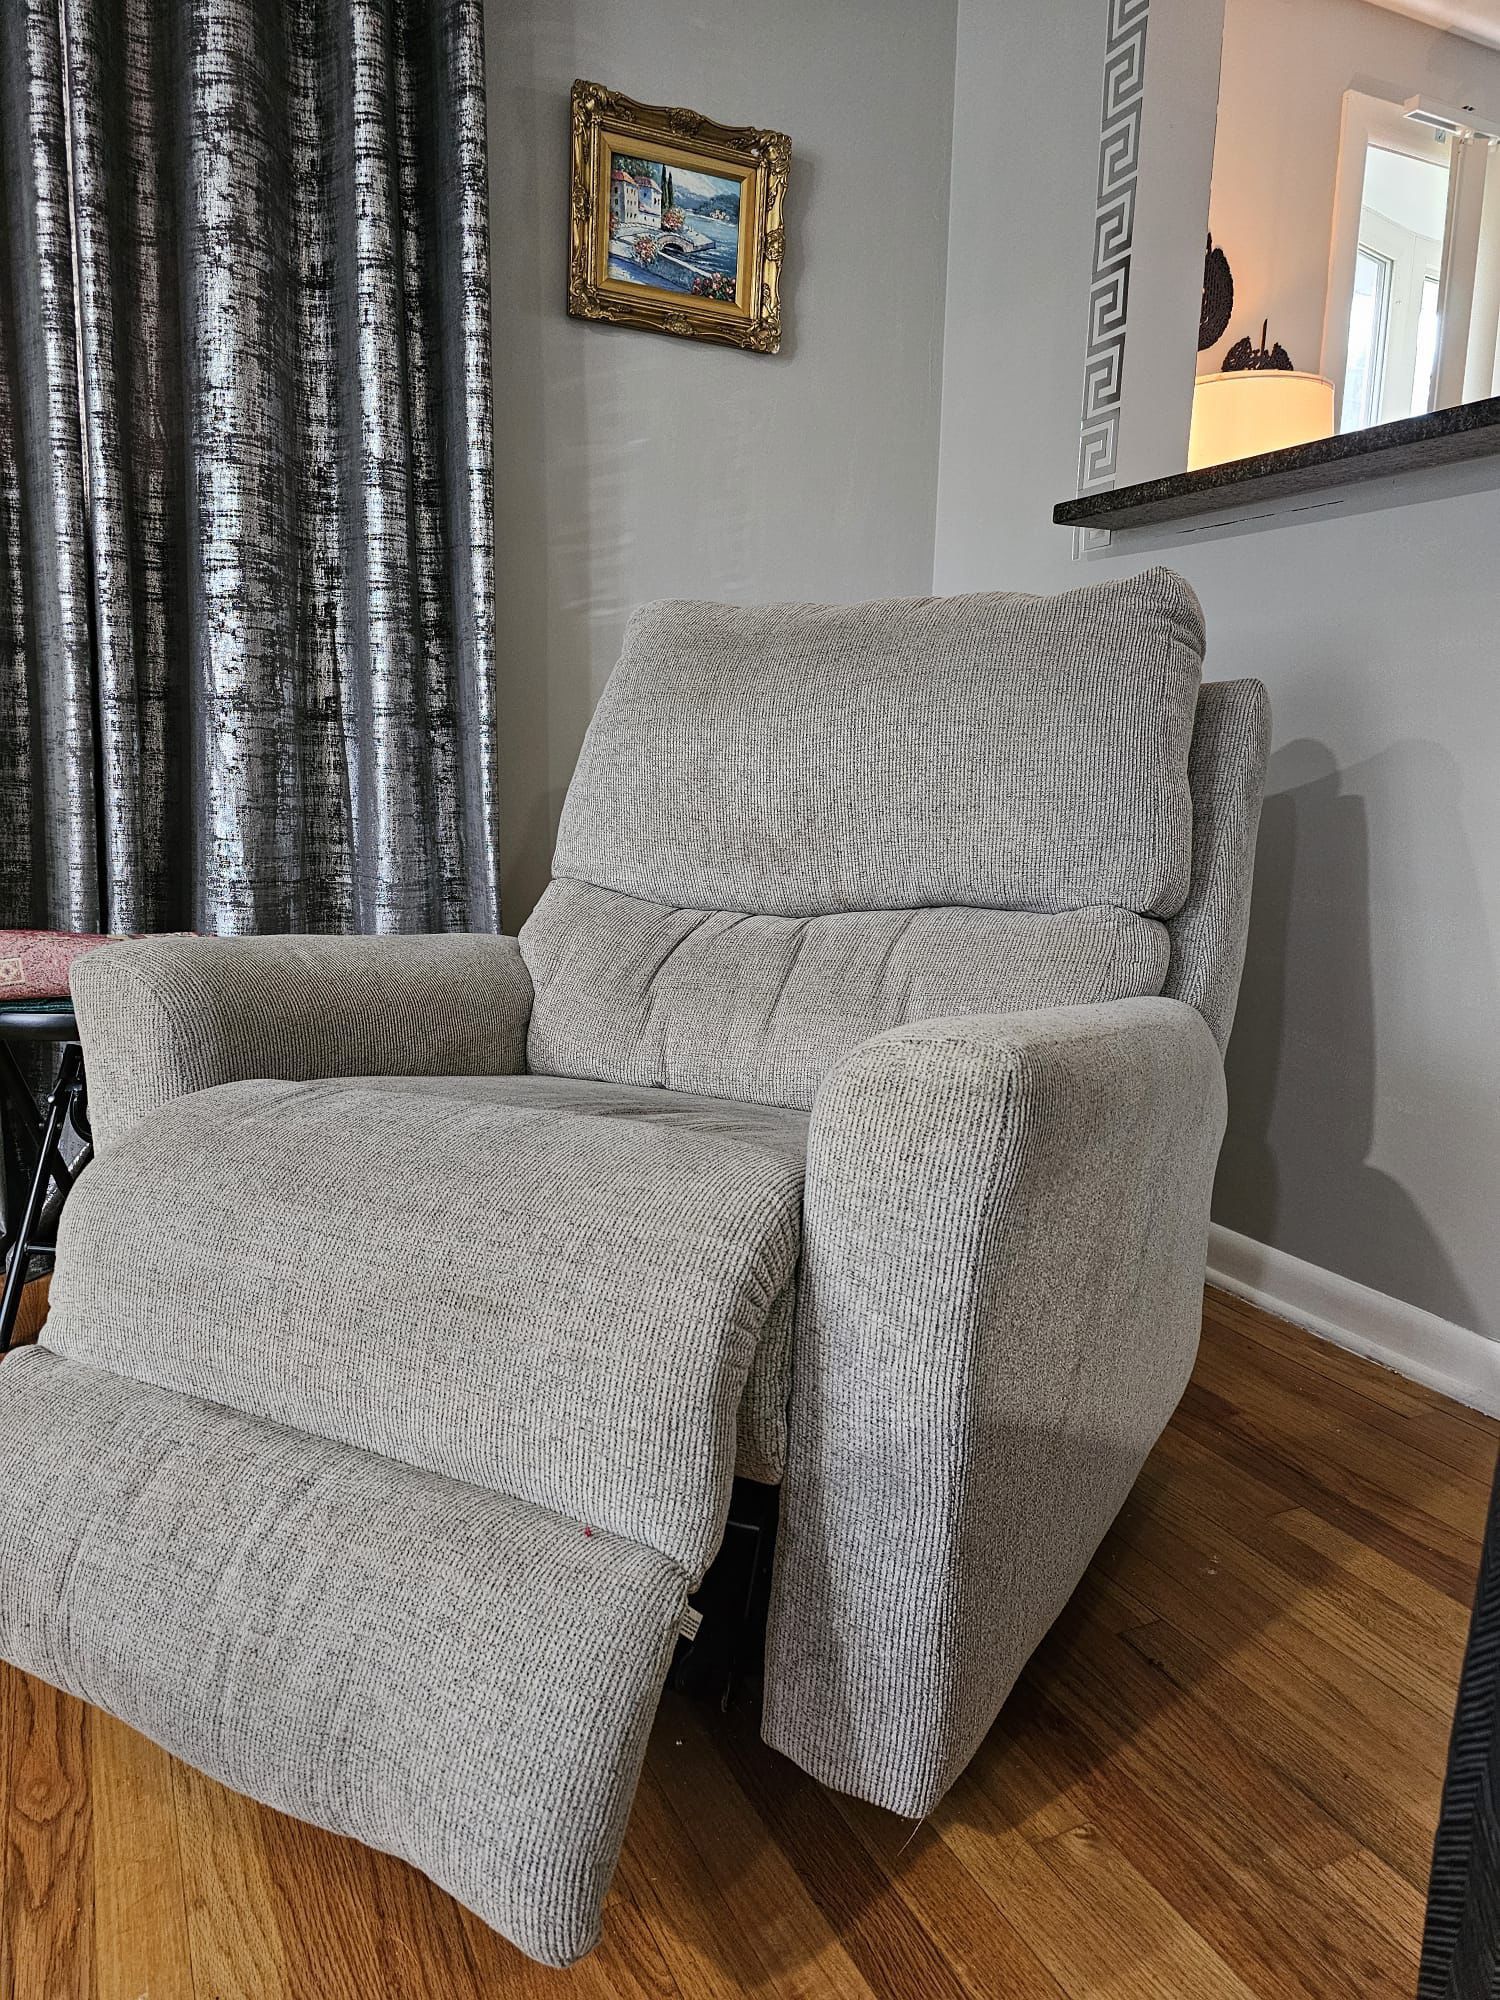 Grey Colored Comfortable Recliner Sofa